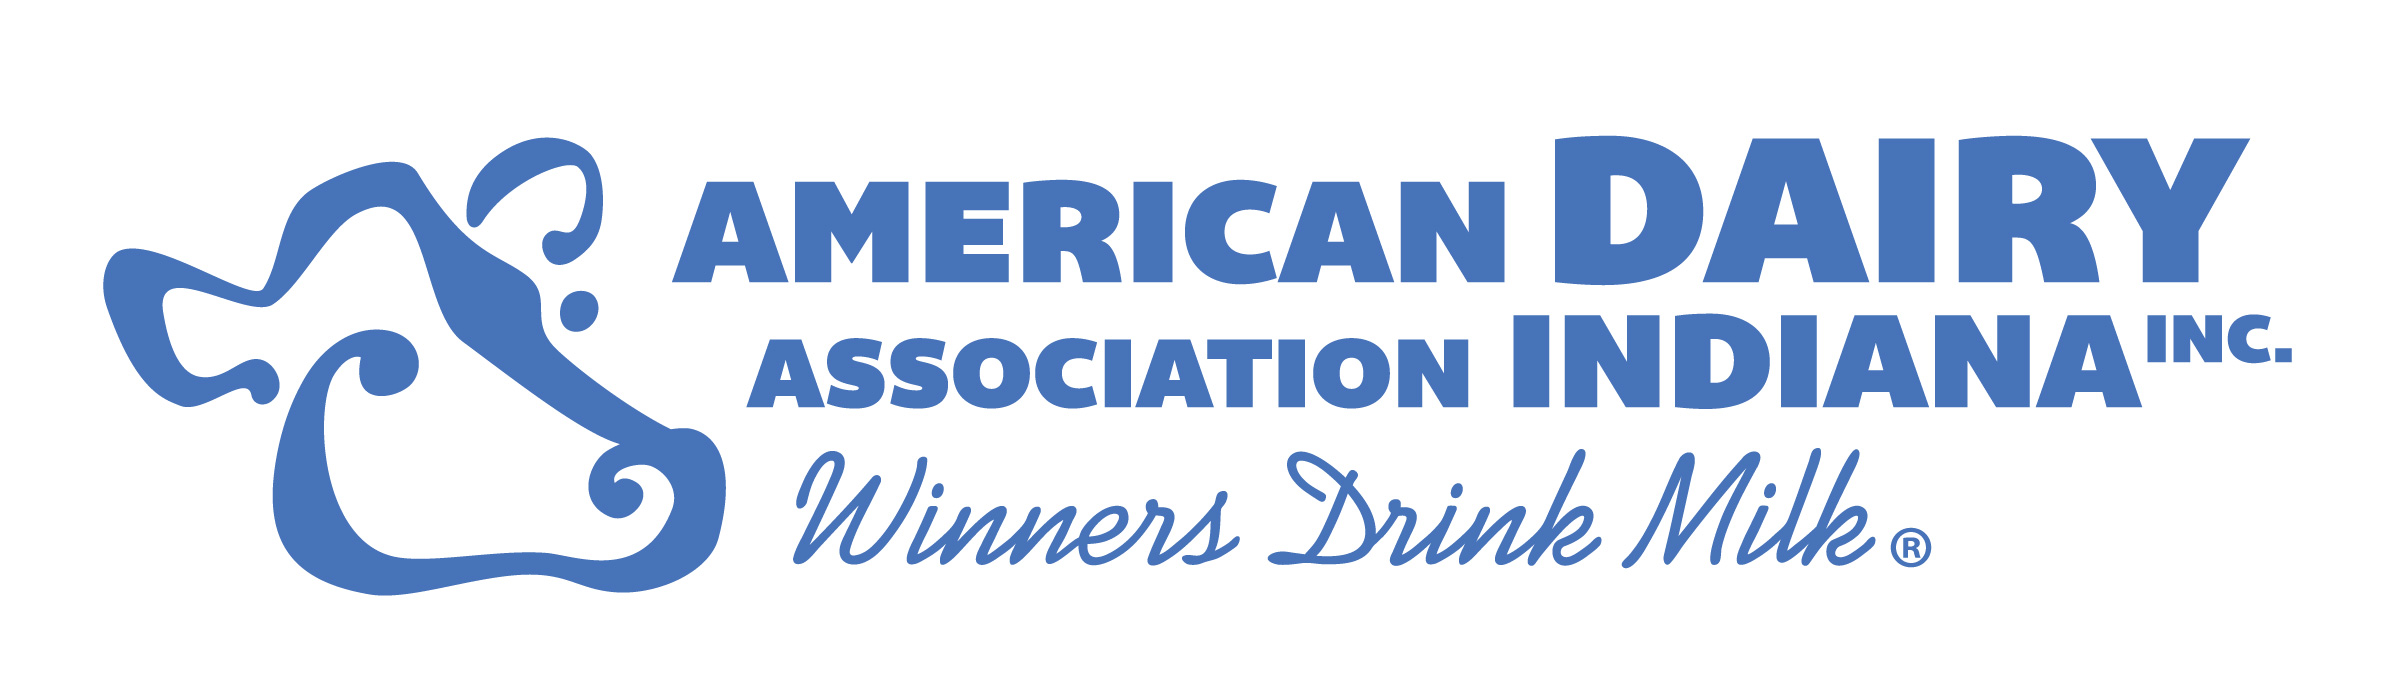 American Dairy Association of Indiana logo